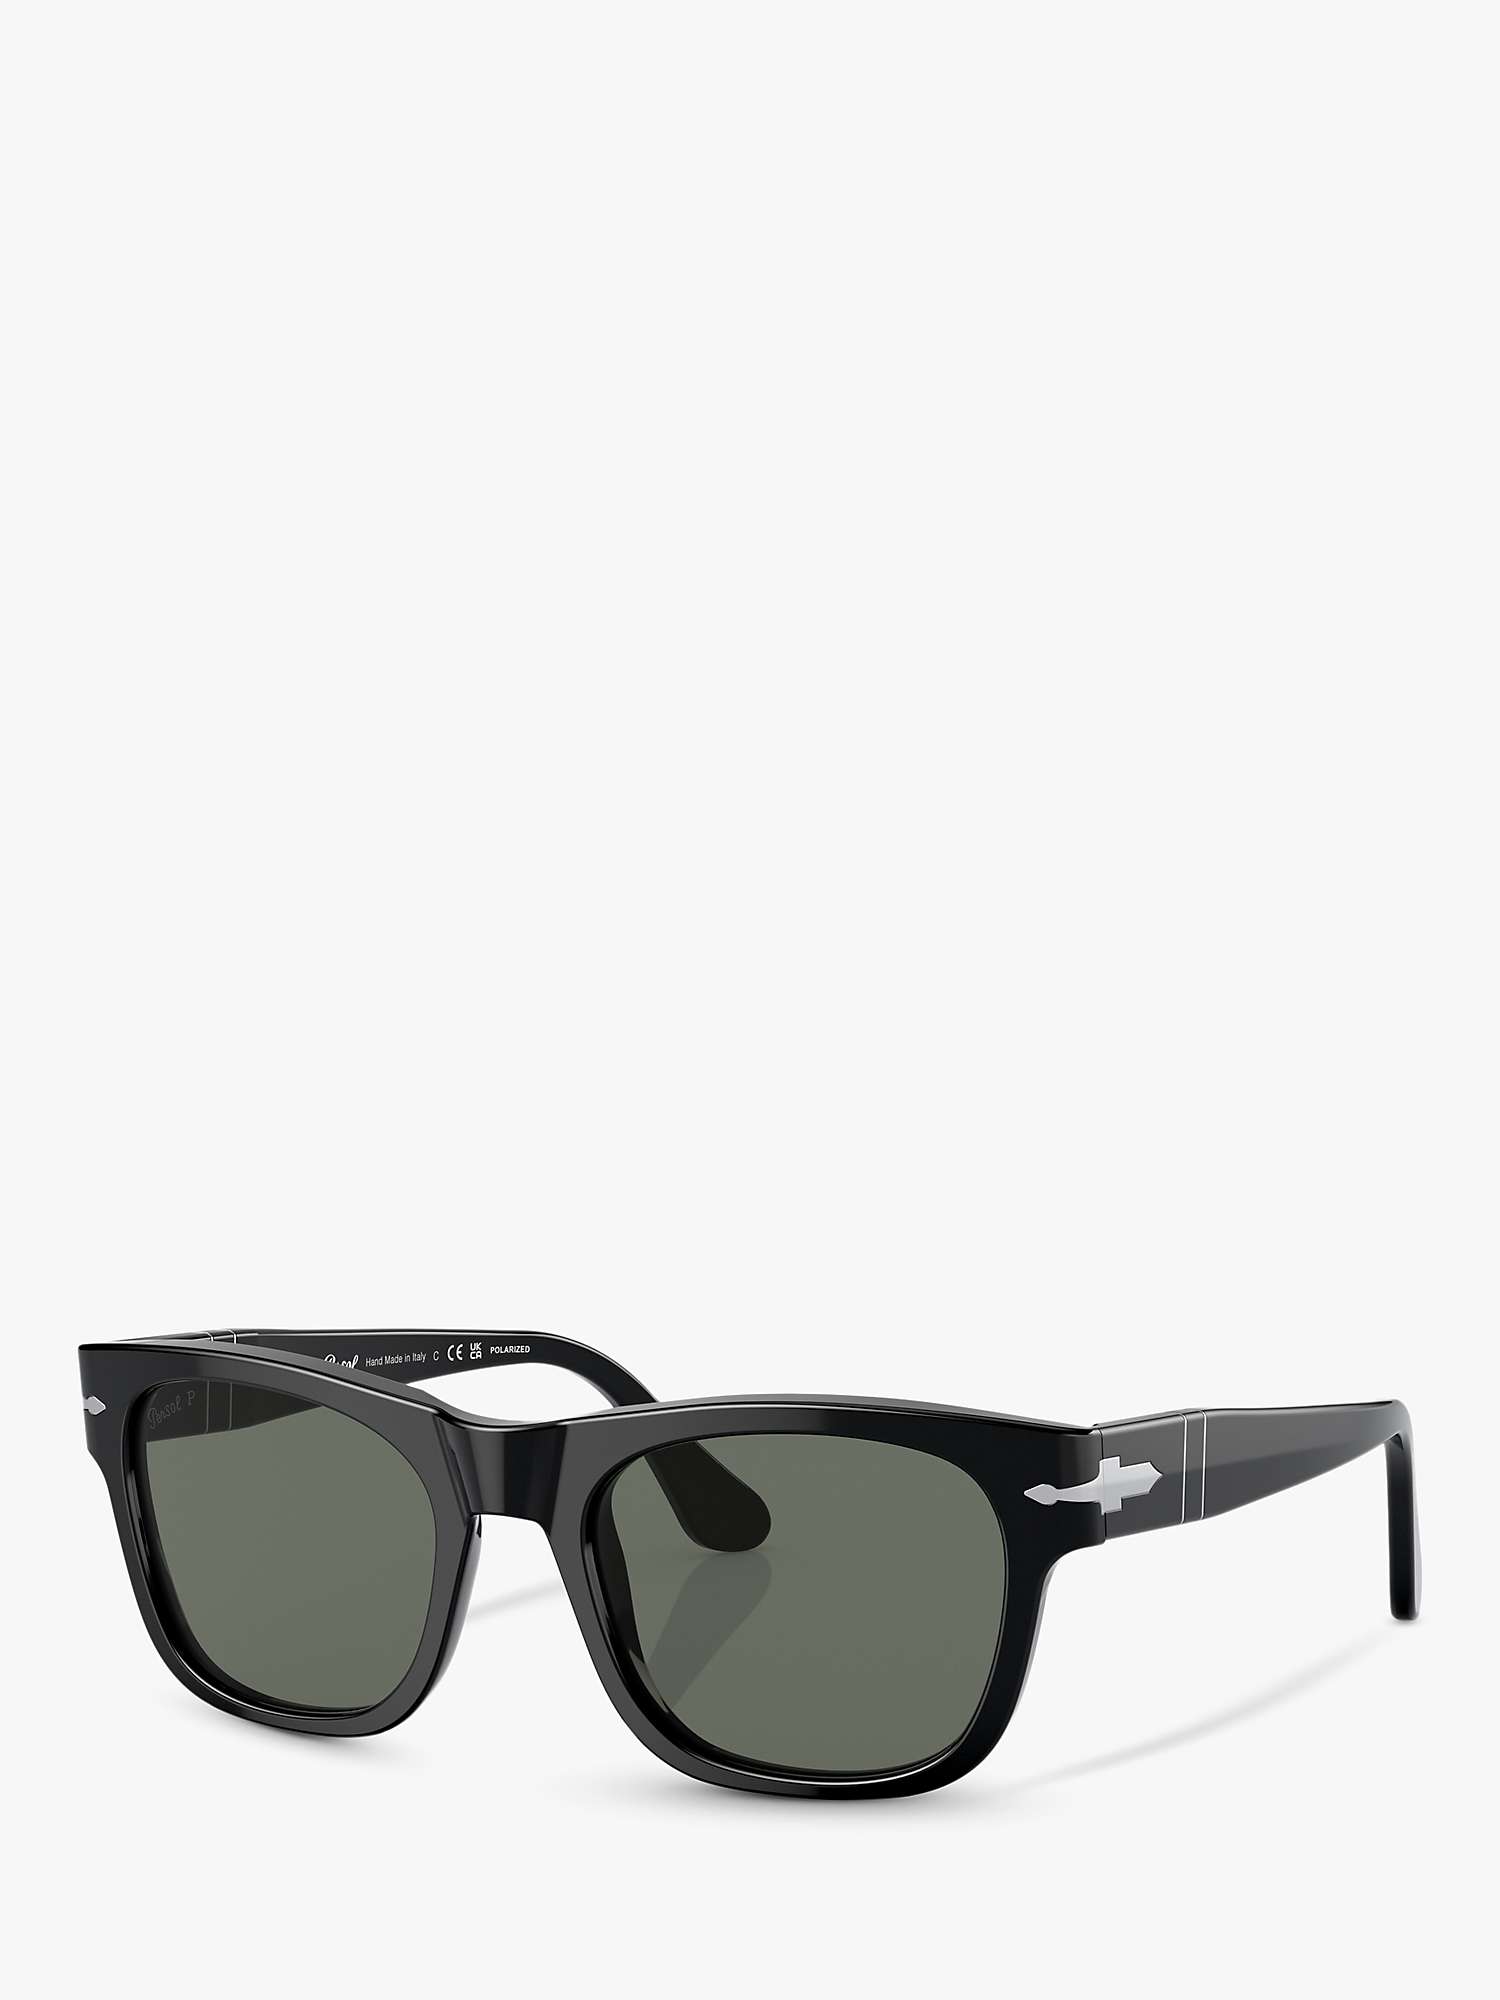 Buy Persol PO3269S Unisex Polarised D-Frame Sunglasses, Black/Grey Online at johnlewis.com